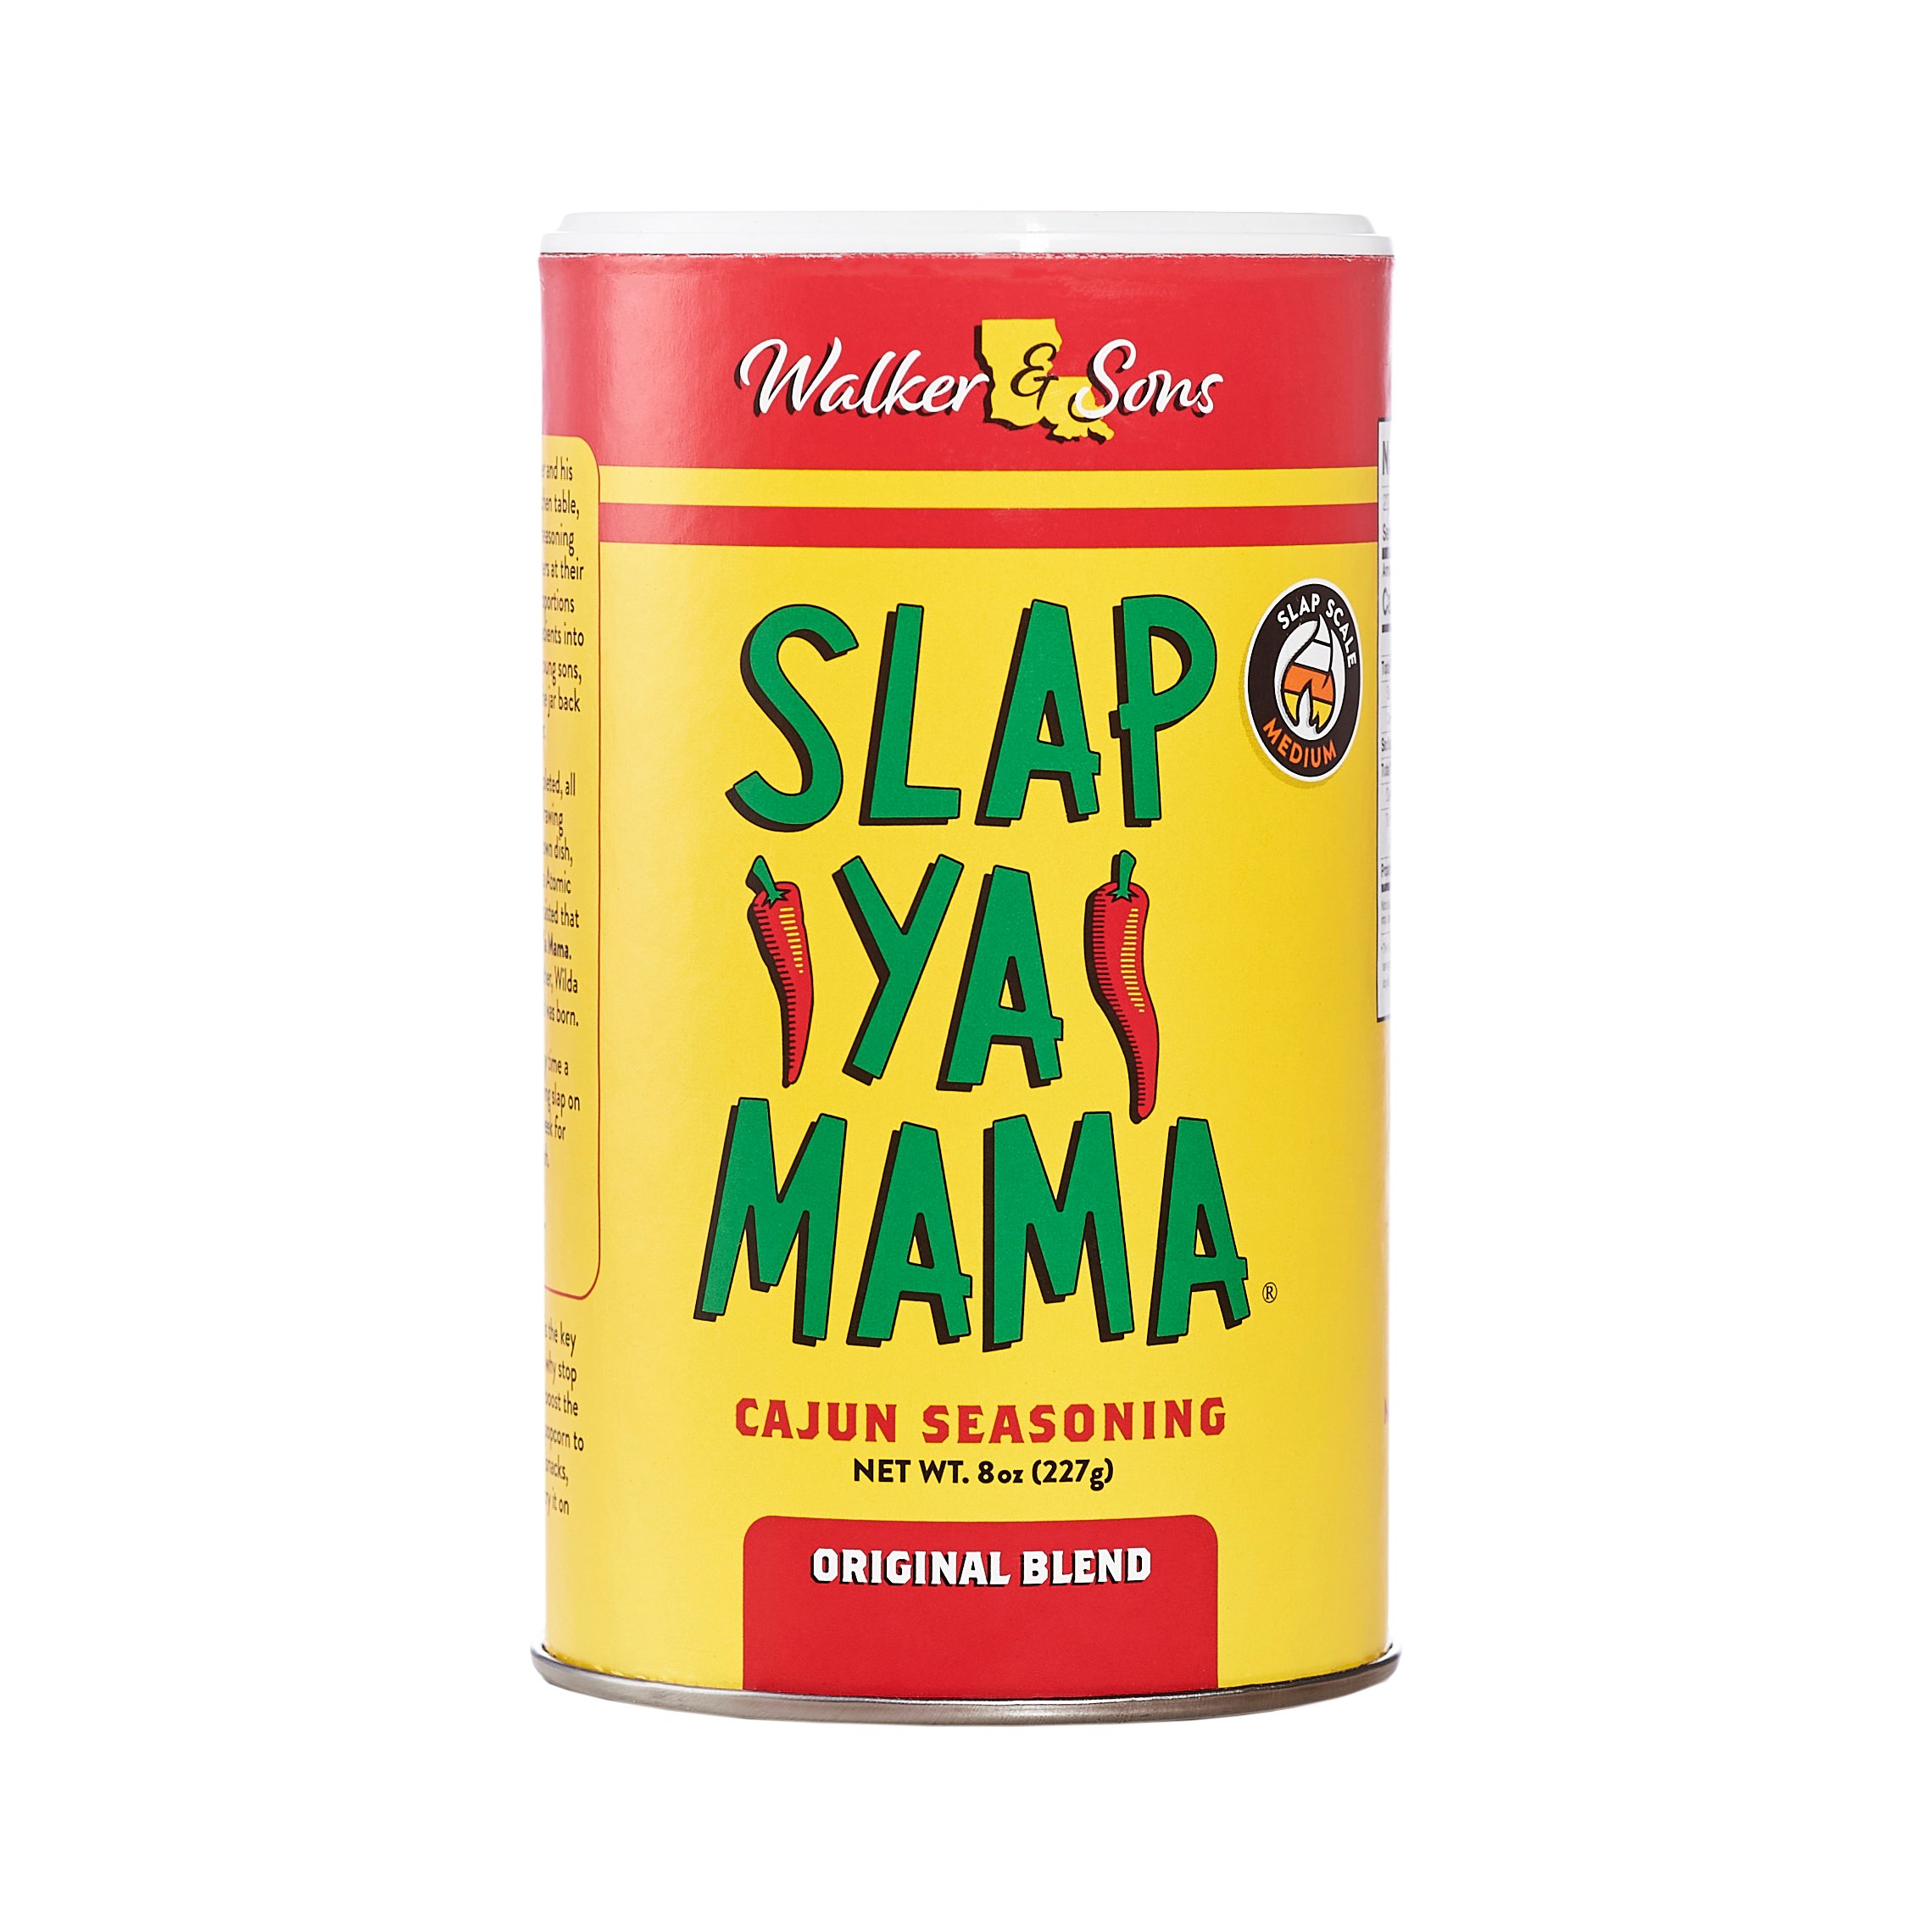 Slap Ya Mama Cajun Seasoning Shop Spice Mixes at H E B